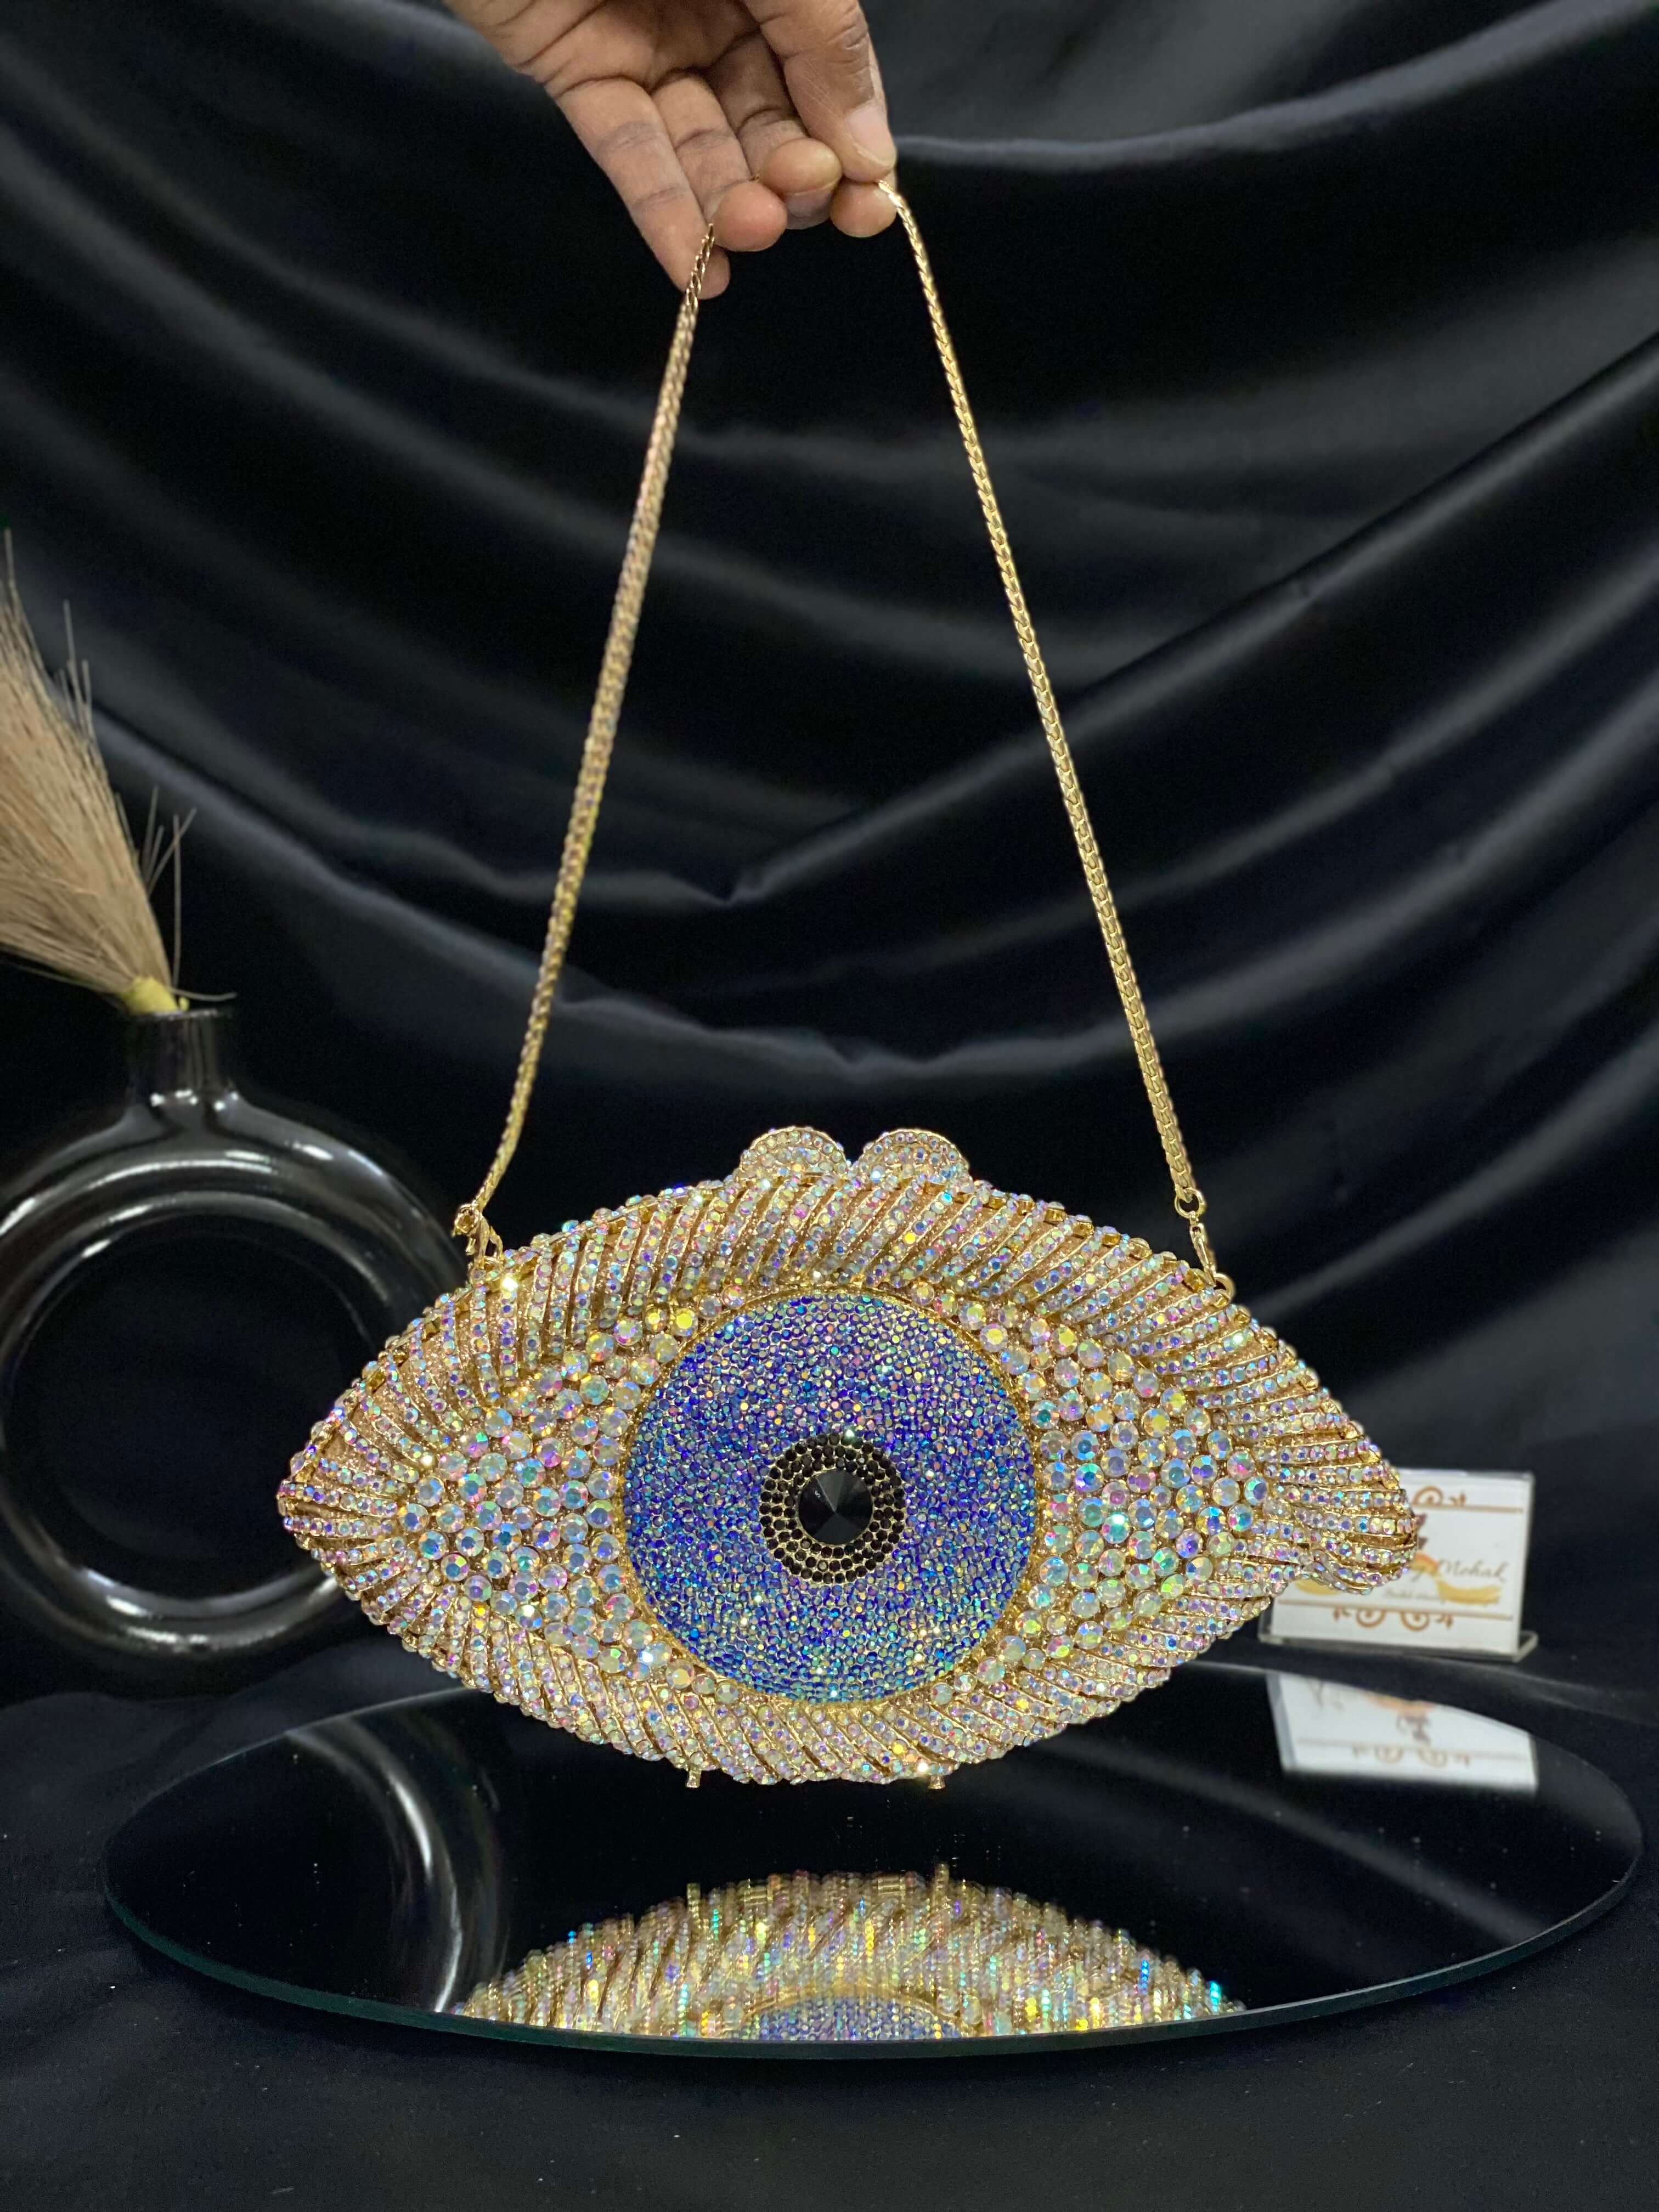 Rhinestone Crystal Clutches at Rs 4000/piece in New Delhi | ID:  2850303372973